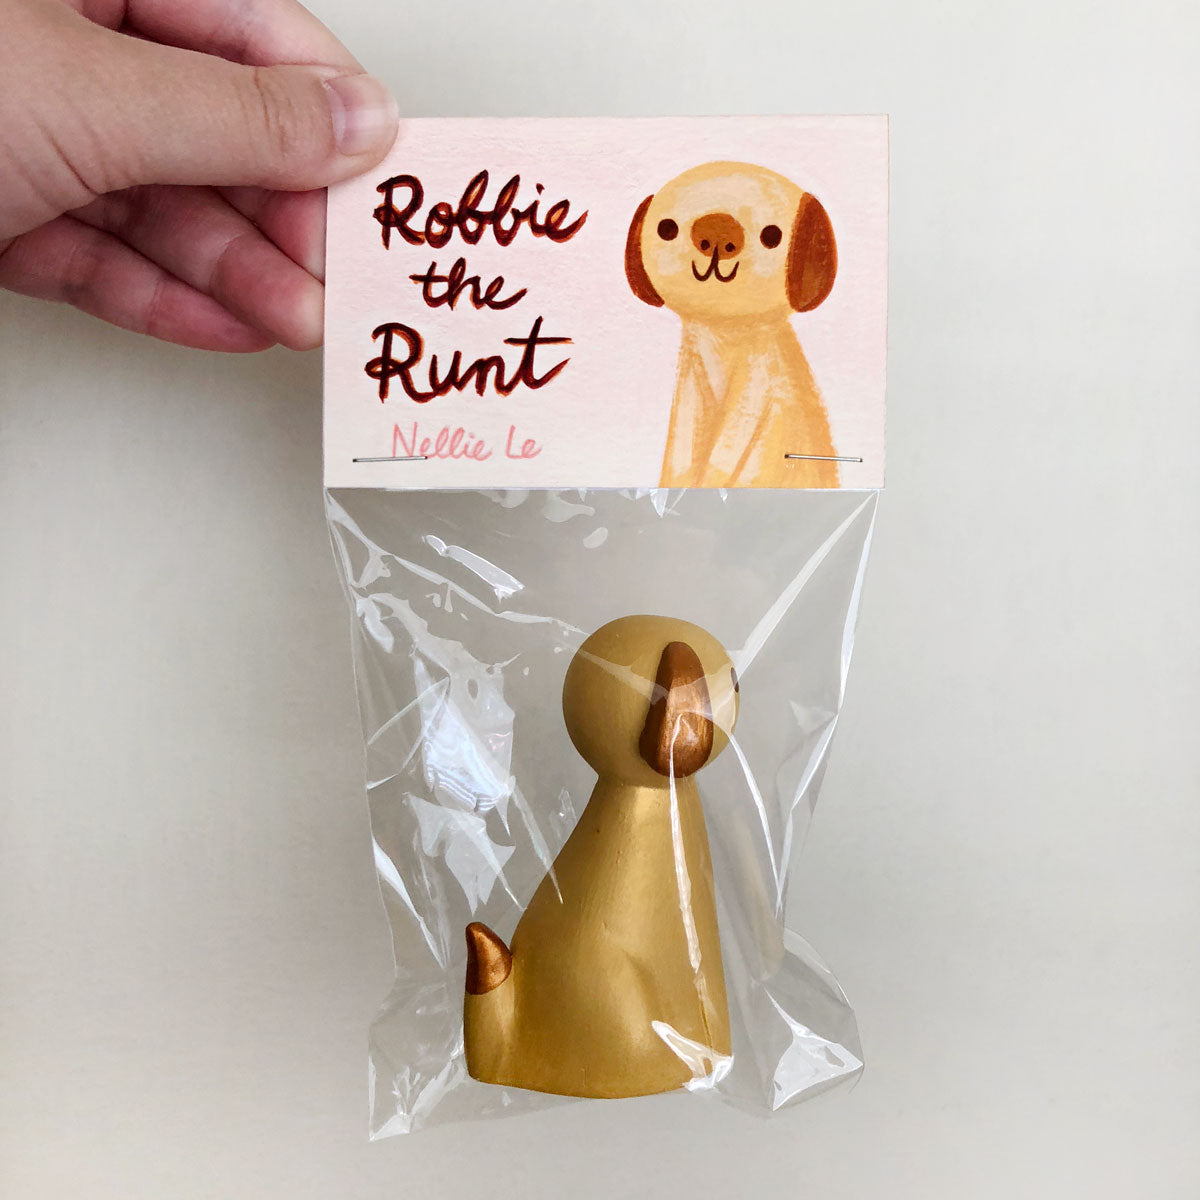 Robbie the Runt (Golden Caramel Edition)